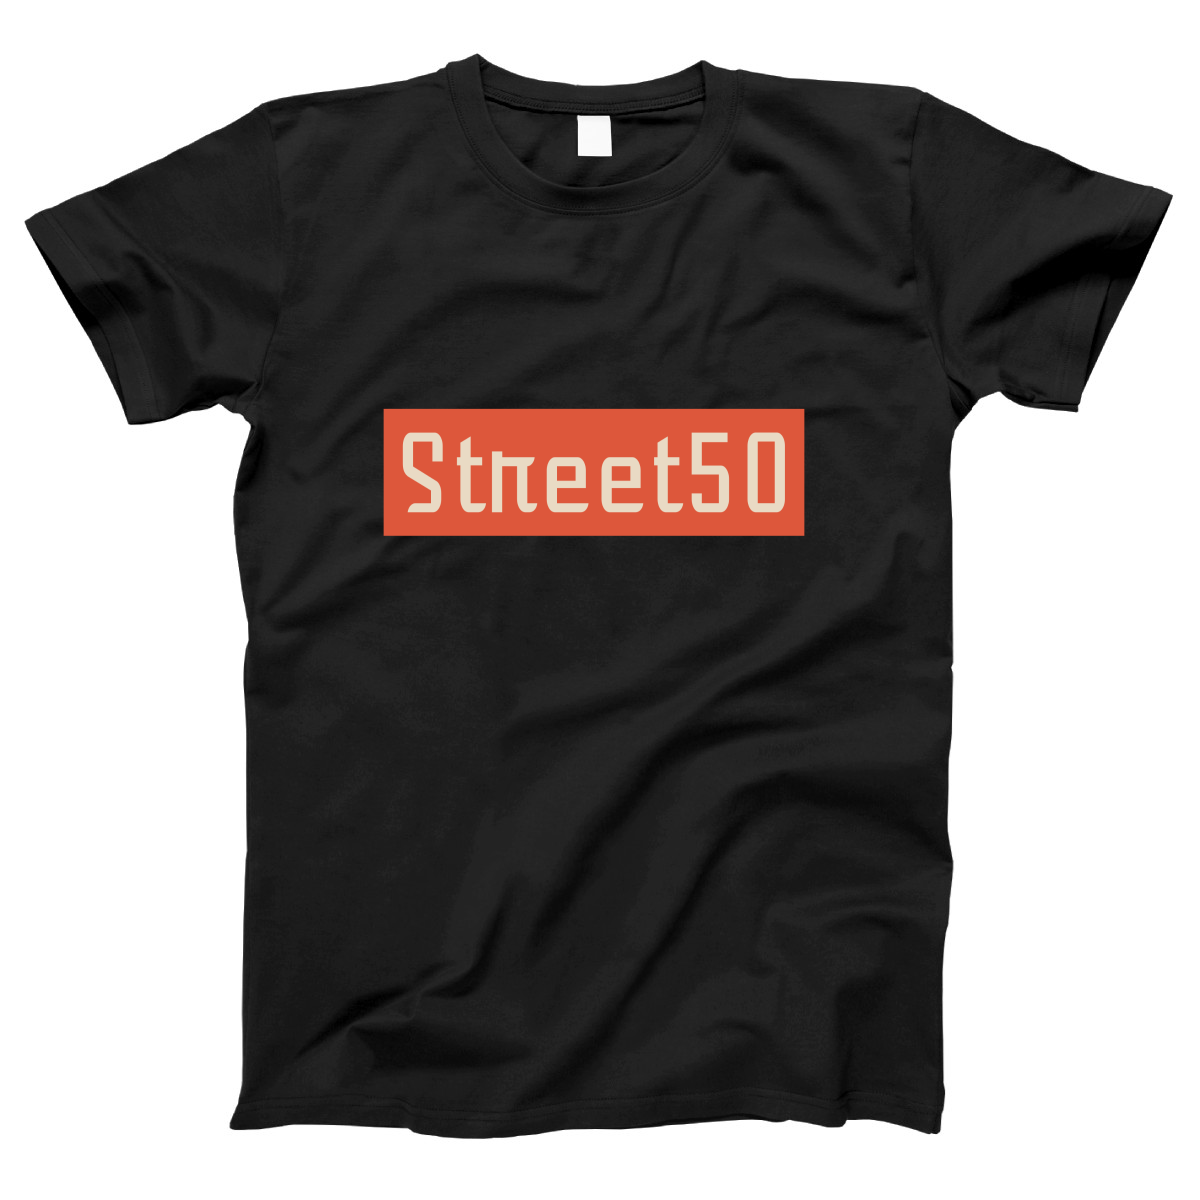 Cool 50 Women's T-shirt